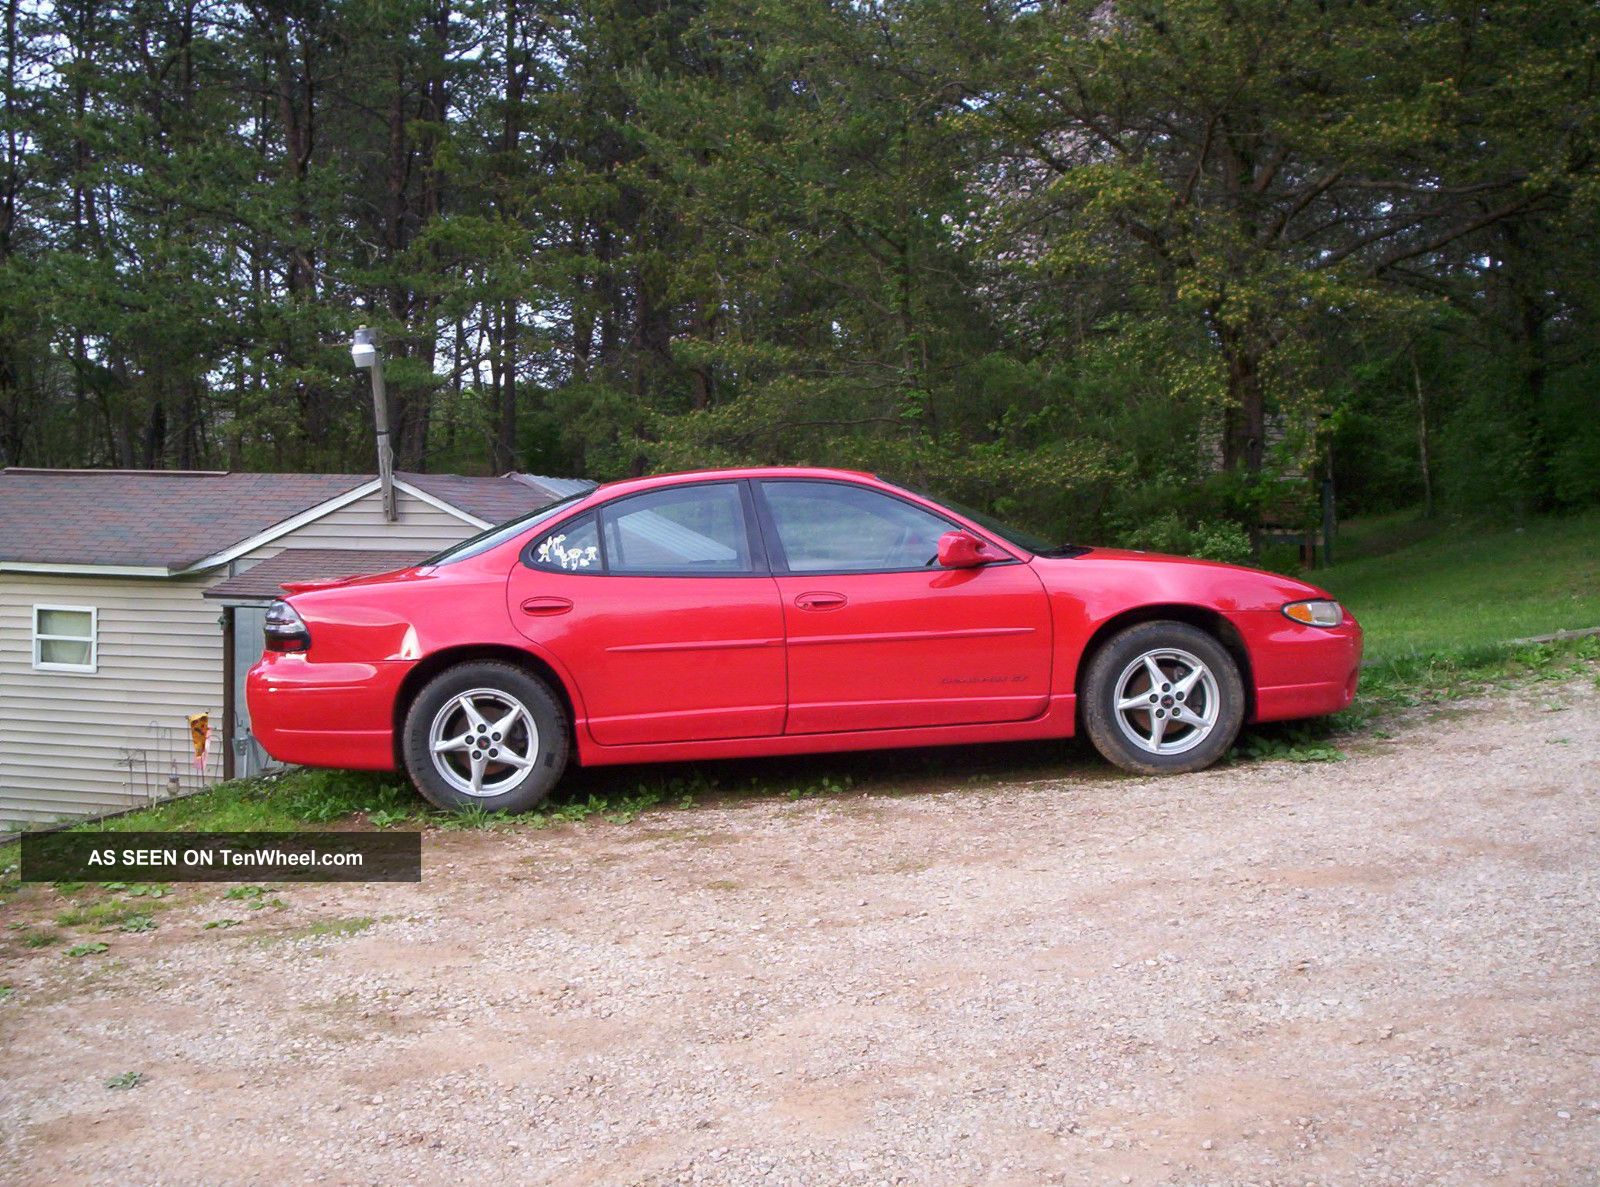 2001 Pontiac Grand Prix,  Red,  4 Door,  Has Fire Damage Grand Prix photo